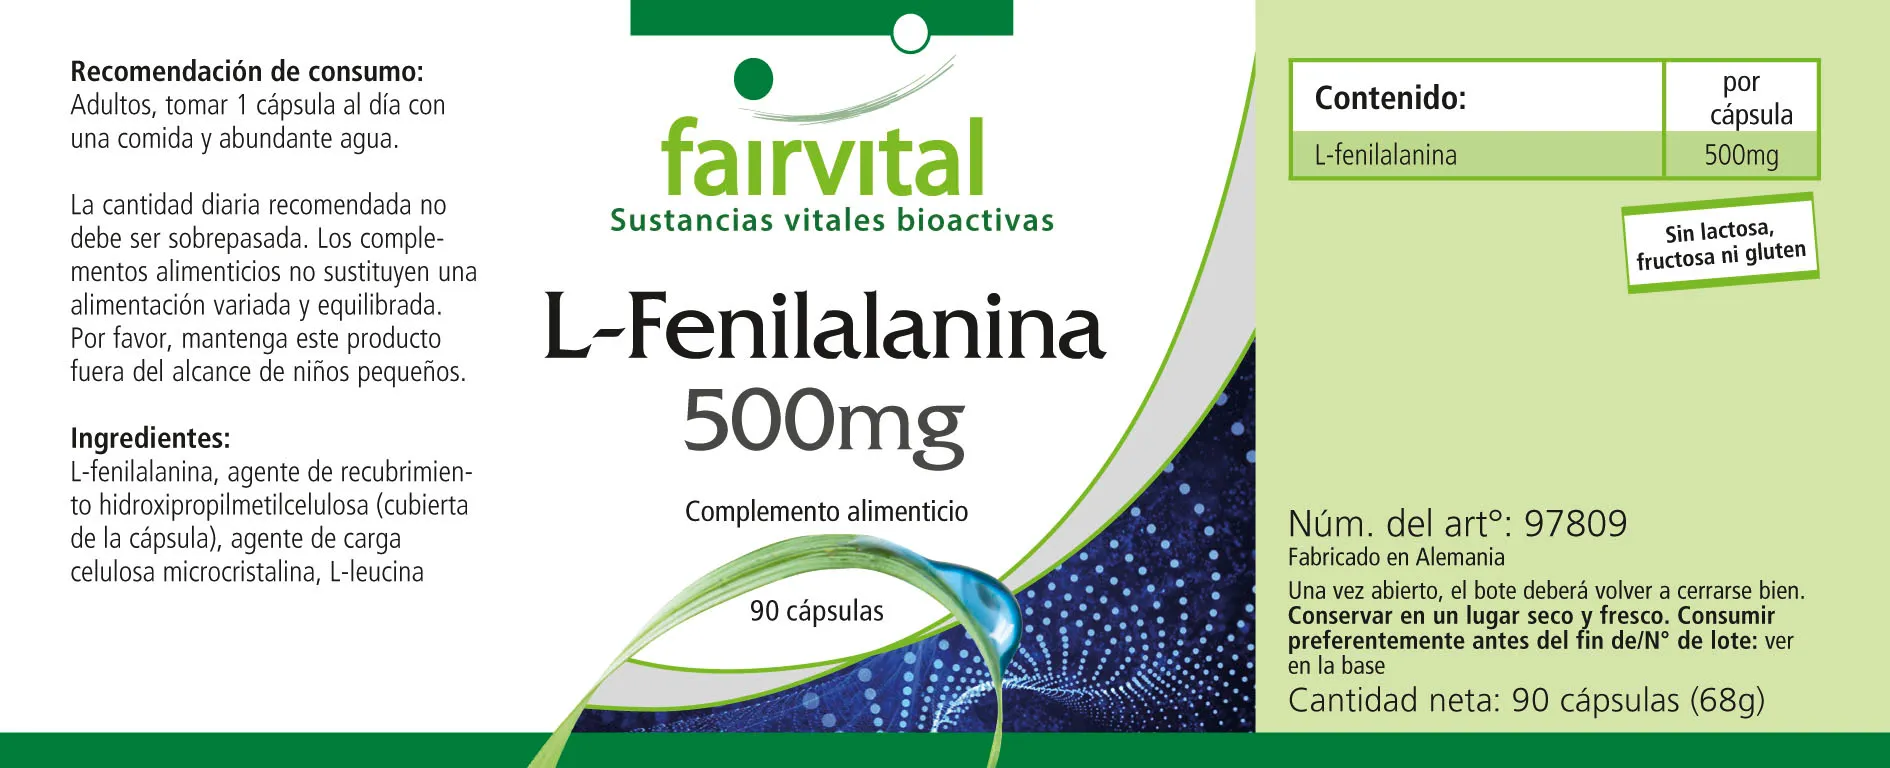 L-phenylalanine 500mg - 90 capsules